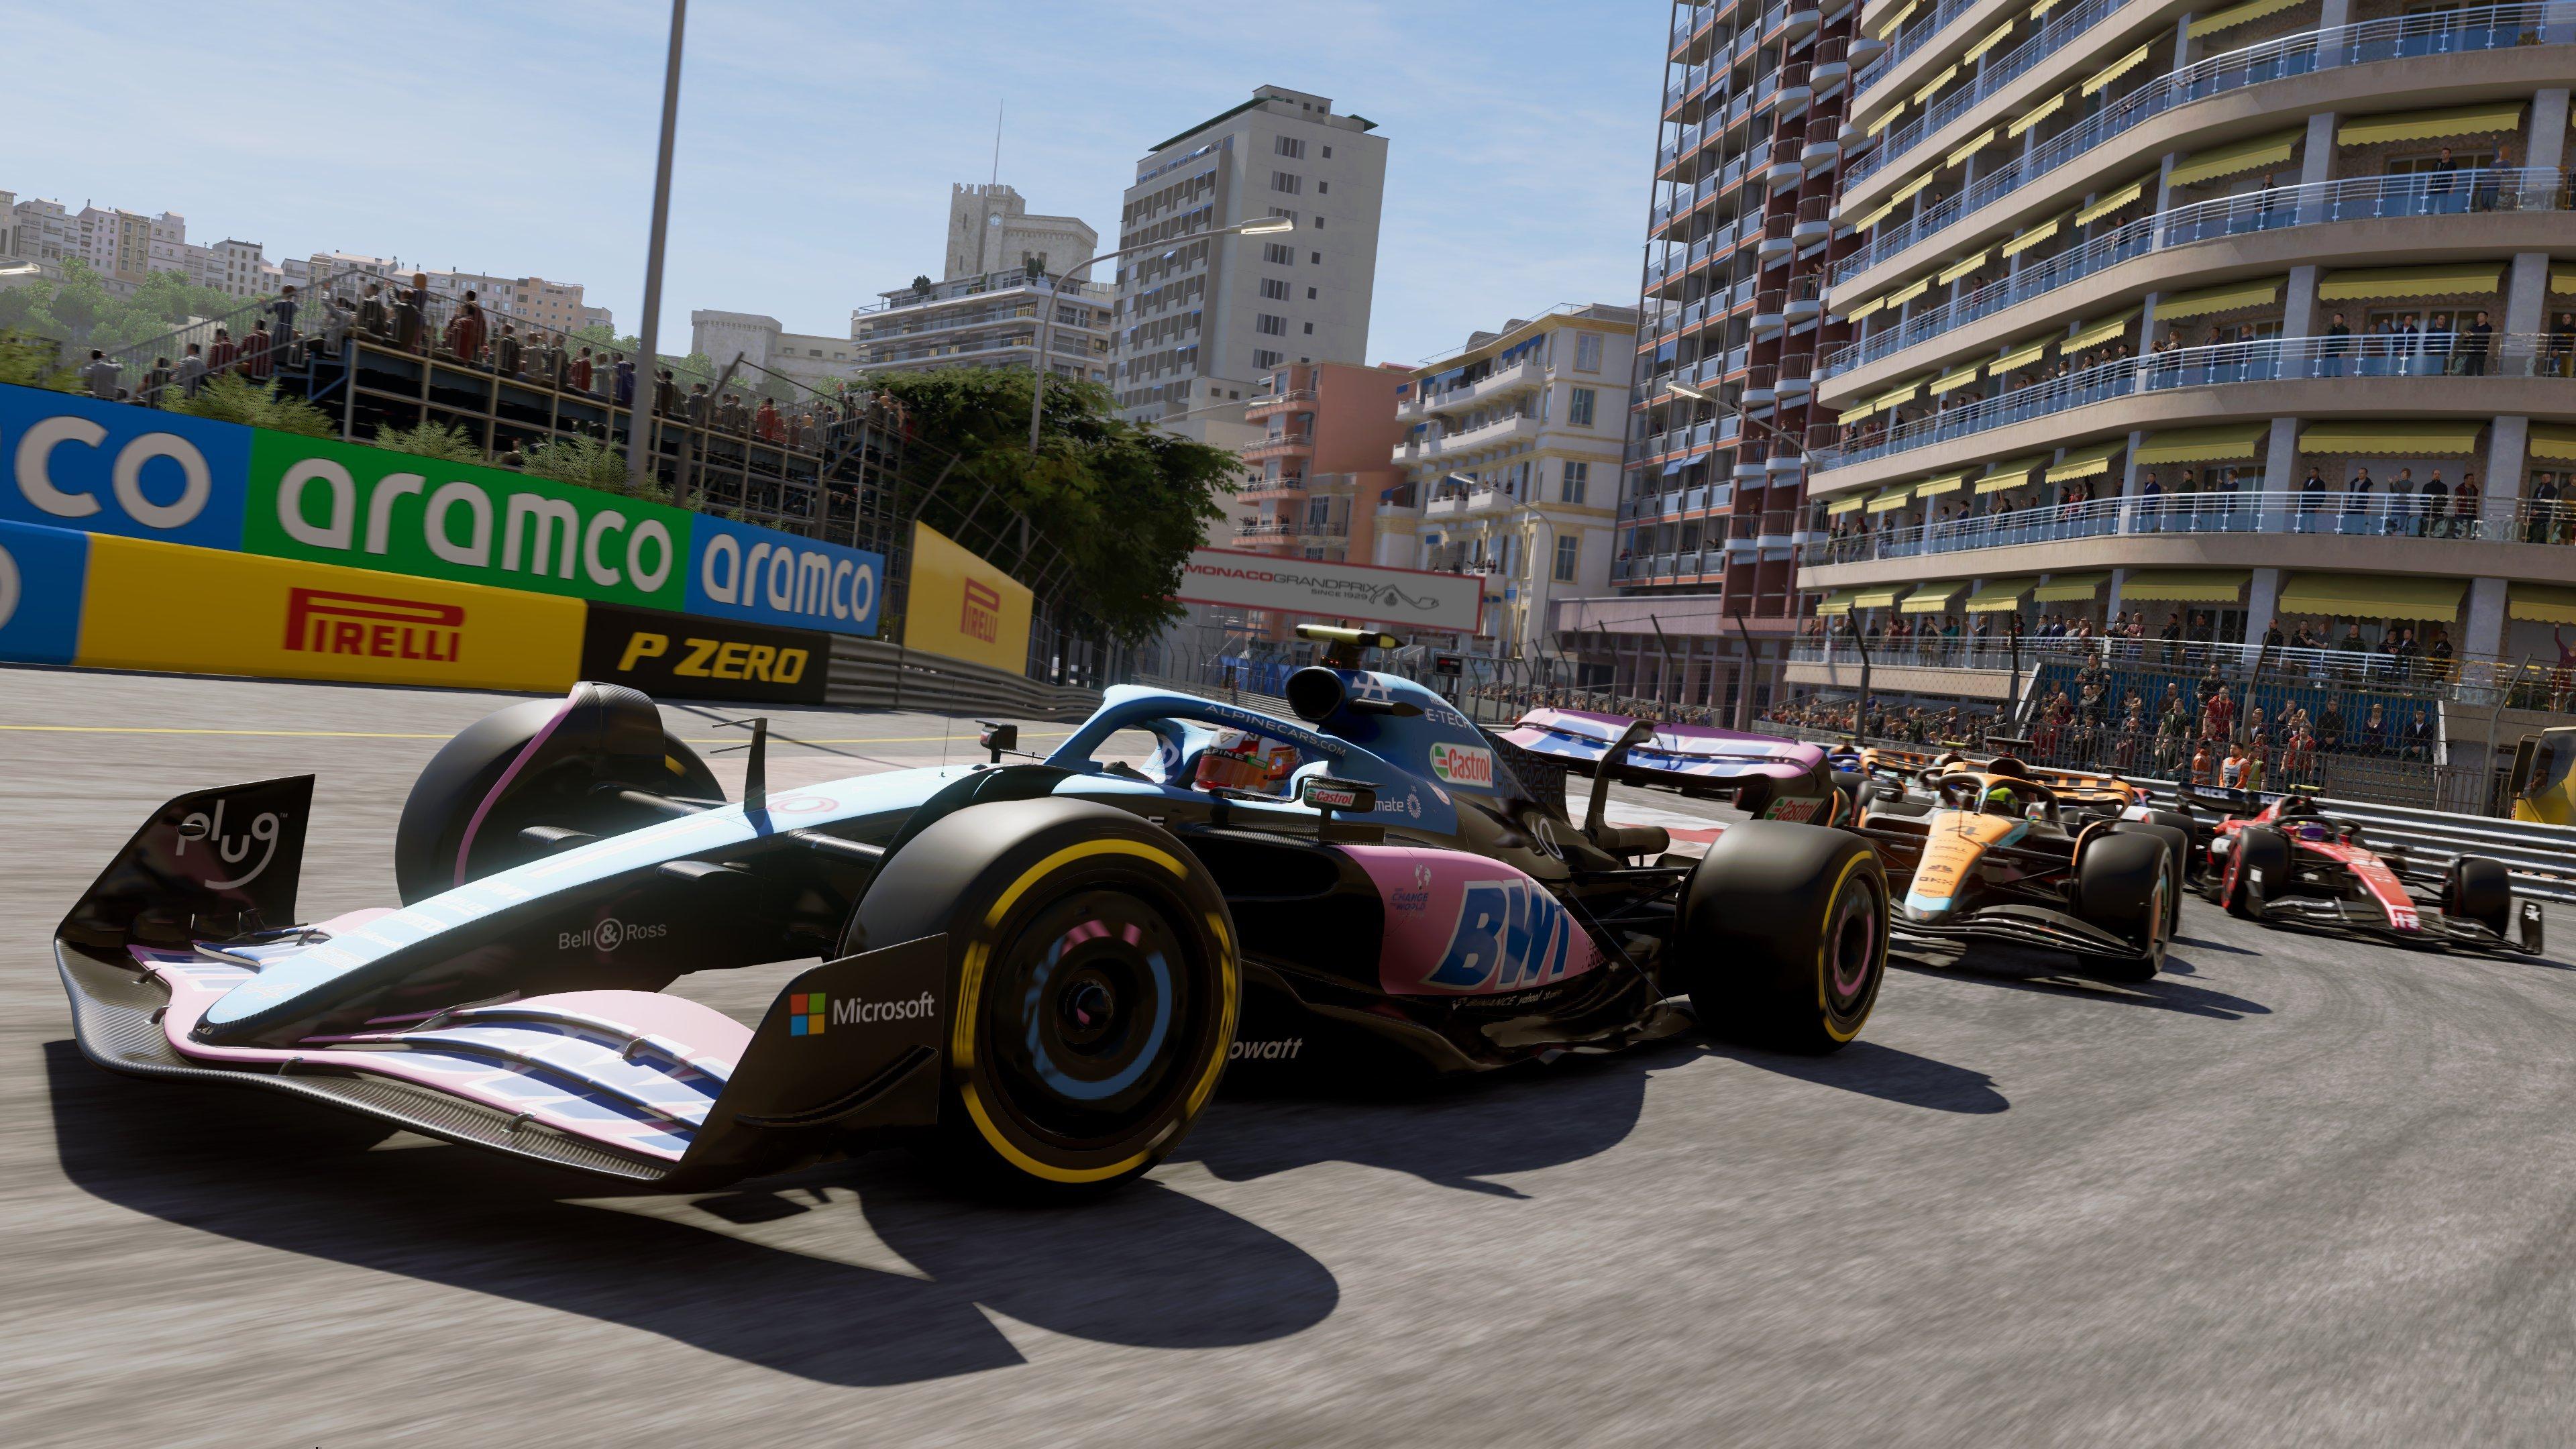 F1 23 - PlayStation 4 | PlayStation 4 | GameStop